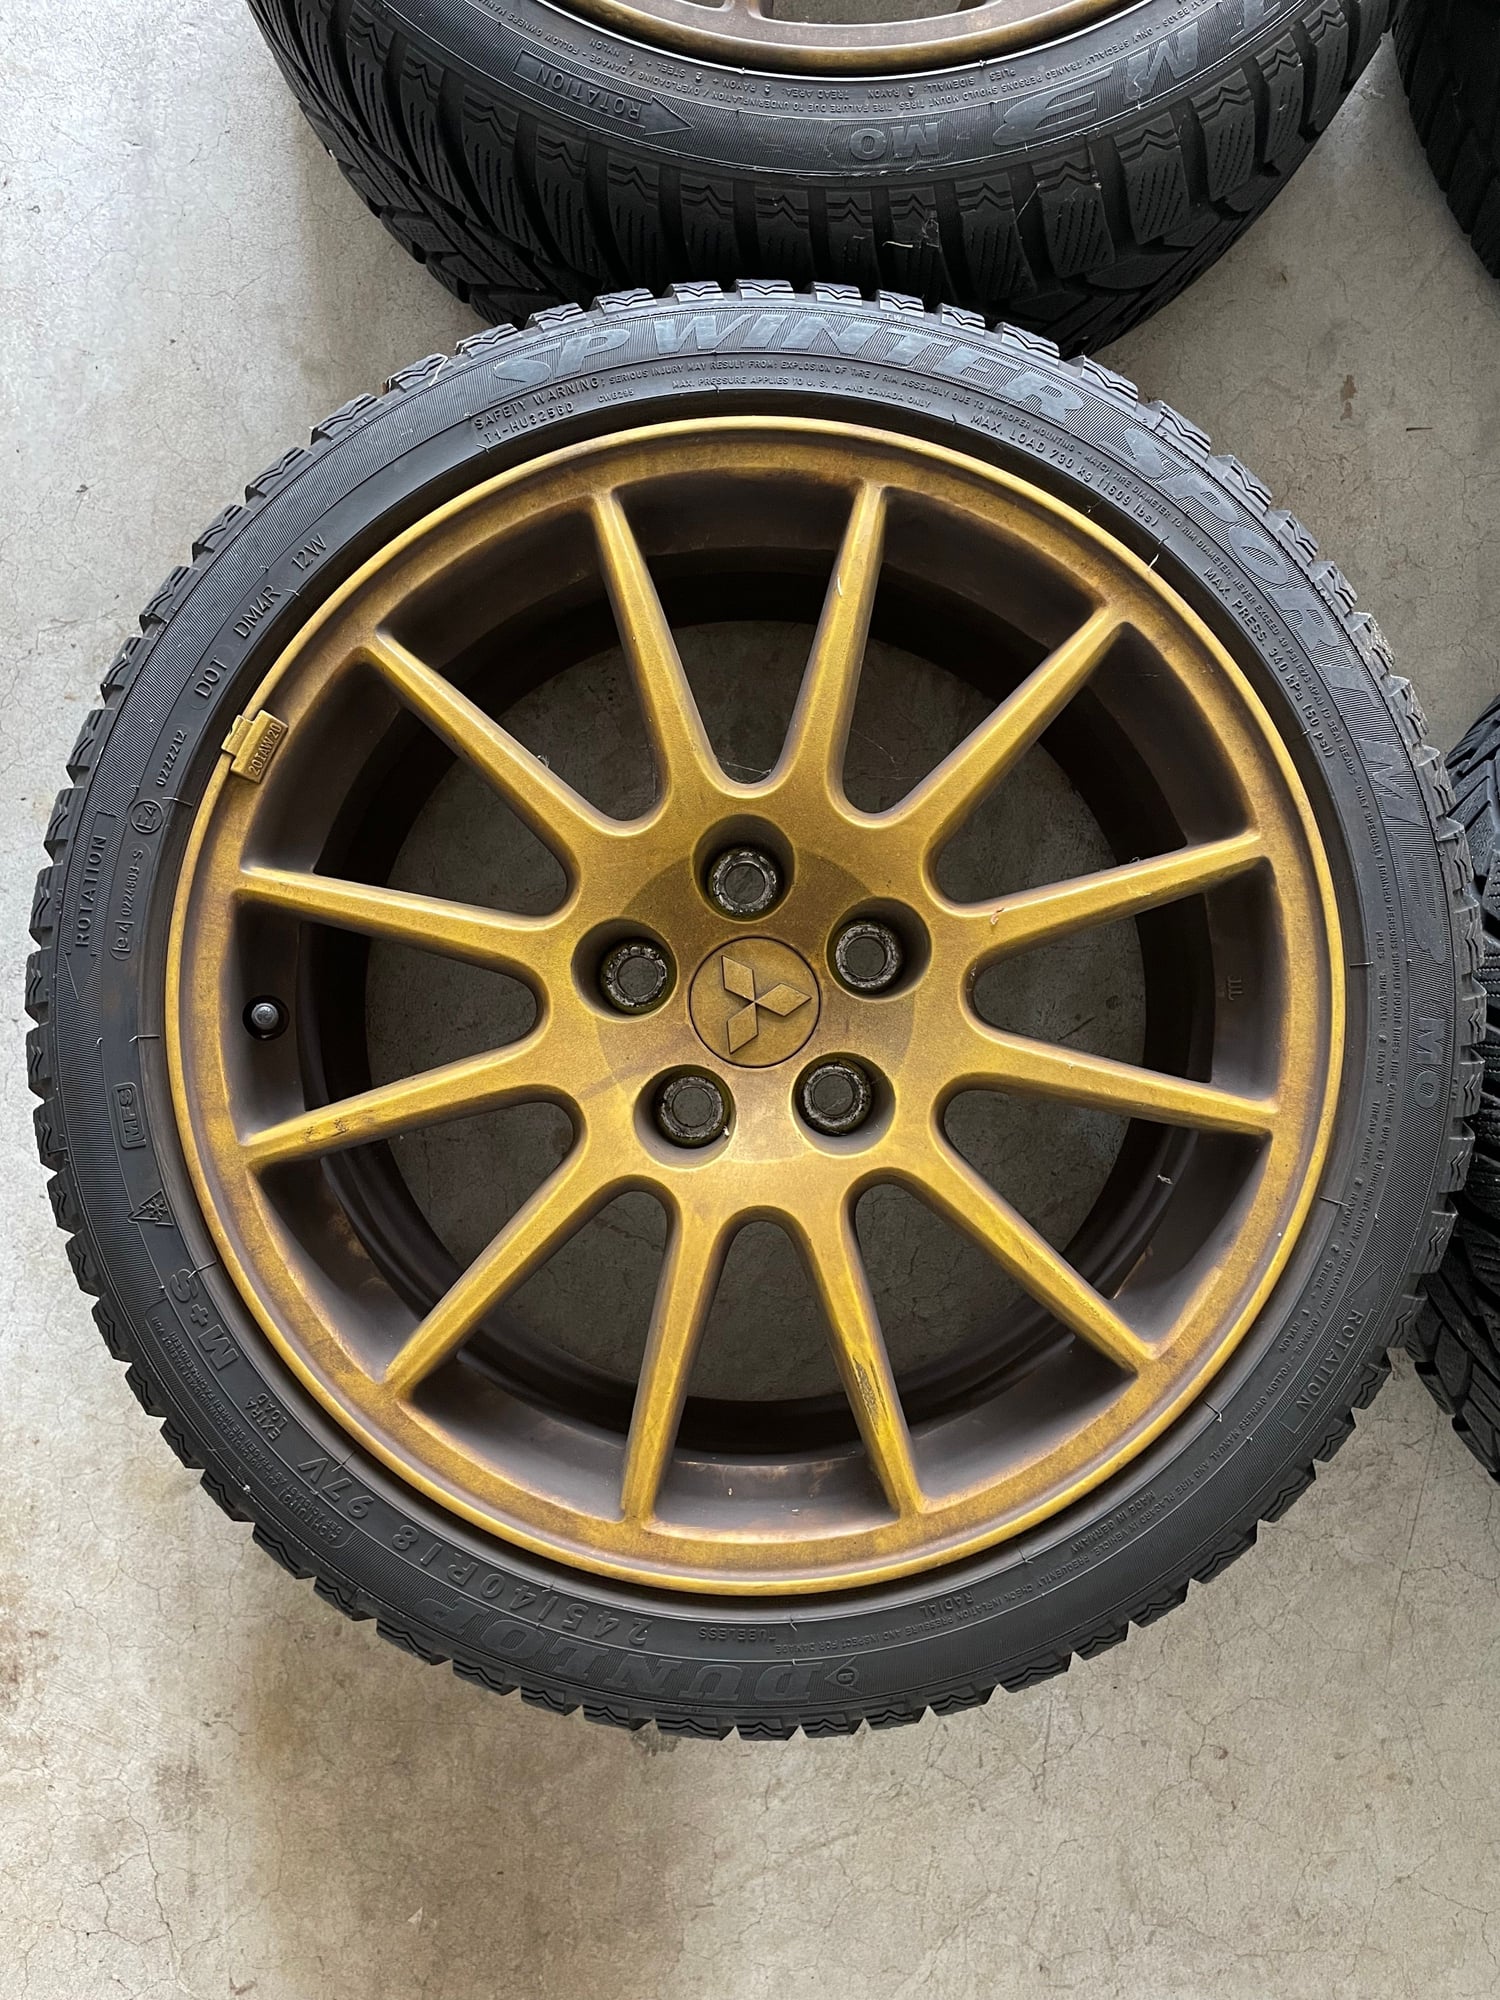 Wheels and Tires/Axles - FS: OEM GSR wheels with Dunlop SP Winter Sport M3 tires - Used - 2008 to 2016 Mitsubishi Lancer Evolution - Belleville, NJ 07109, United States